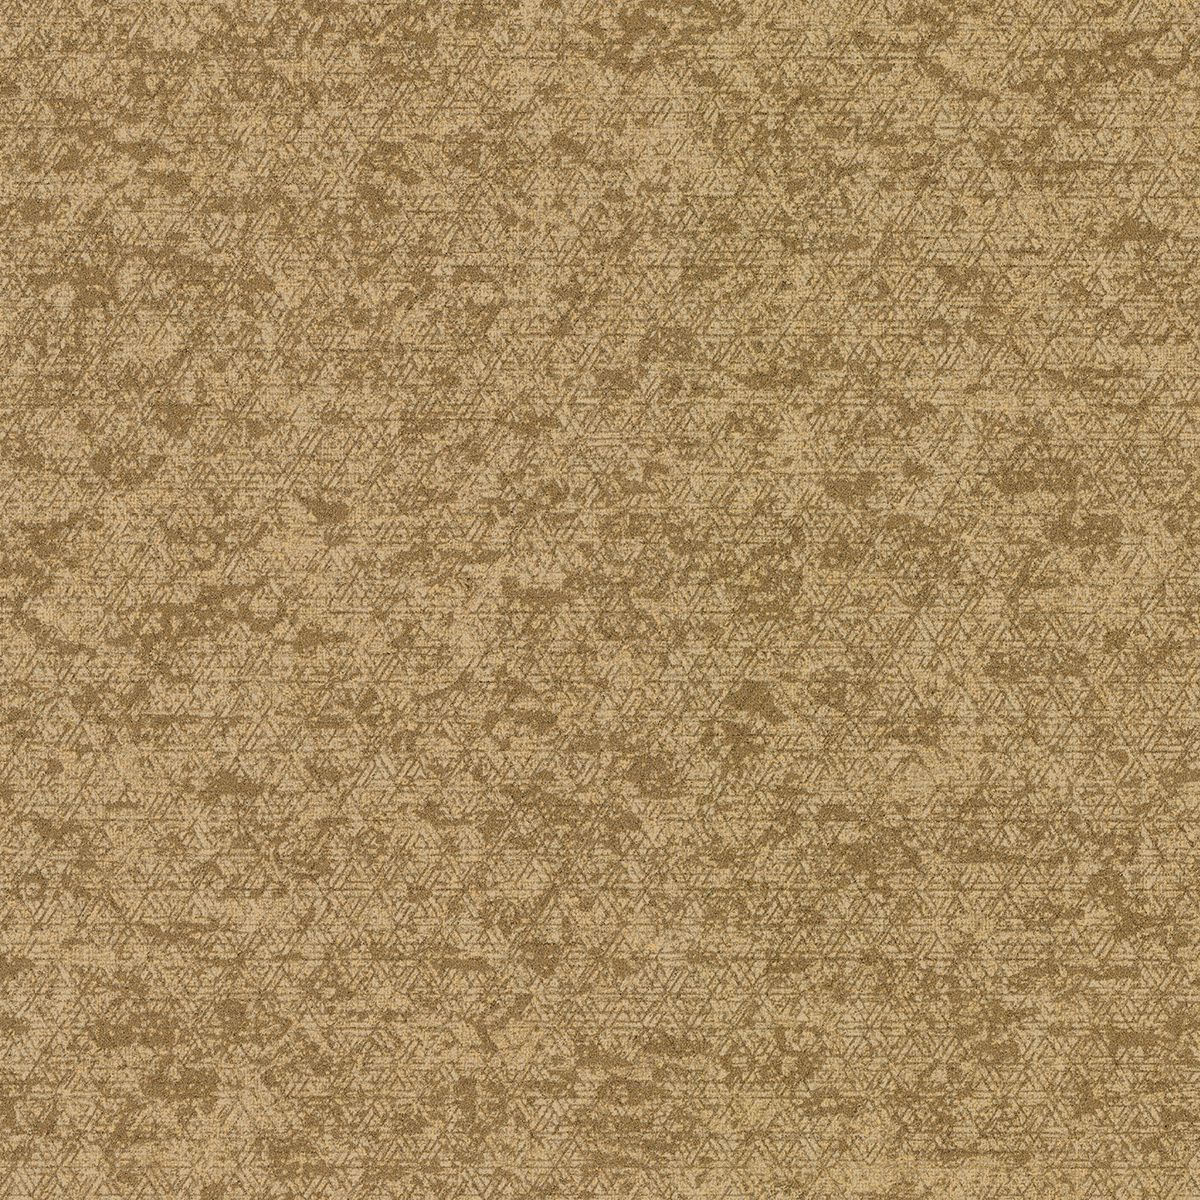 2927 21002 Cosmic Gold Geometric Wallpaper By Brewster